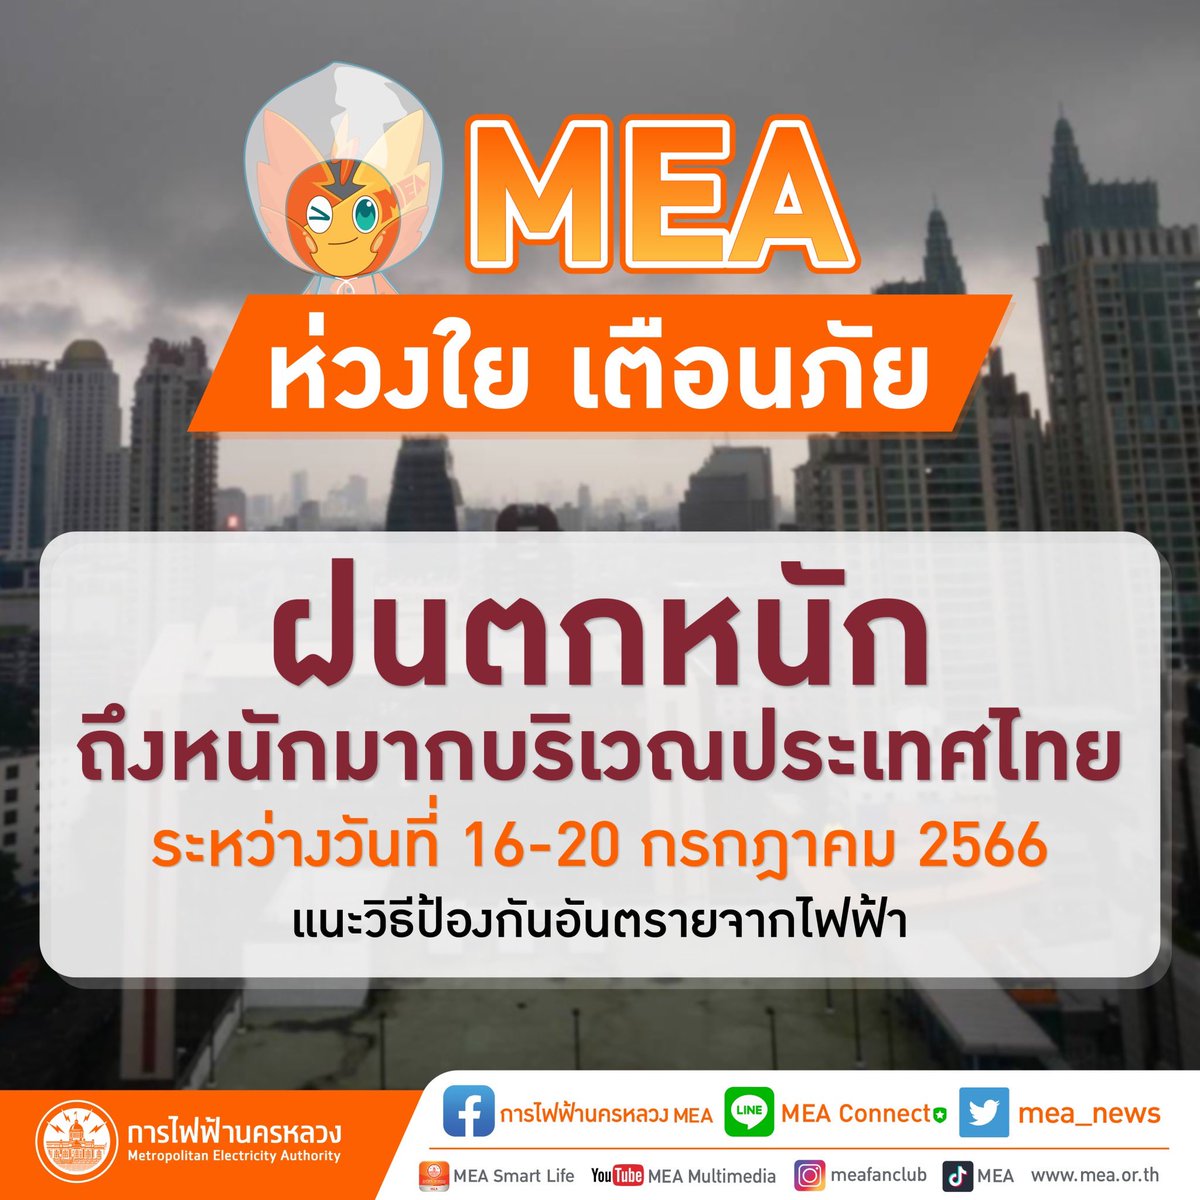 MEA ห่วงใย เตือนภัยฝนตกหนักถึงหนักมากบริเวณประเทศไทย ช่วง 16-20 ก.ค.66 แนะวิธีป้องกันอันตรายจากไฟฟ้า 

เพิ่มเติมคลิก > mea.or.th/content/detail…

#เตือนภัยฝนตกหนัก #กรมอุตุนิยมวิทยา 
#วิธีป้องกันอันตรายจากไฟฟ้า
#กระทรวงมหาดไทย #บำบัดทุกข์บำรุงสุข #MOI
#SDGsforAlL #SEPtoSDGs #SDGs